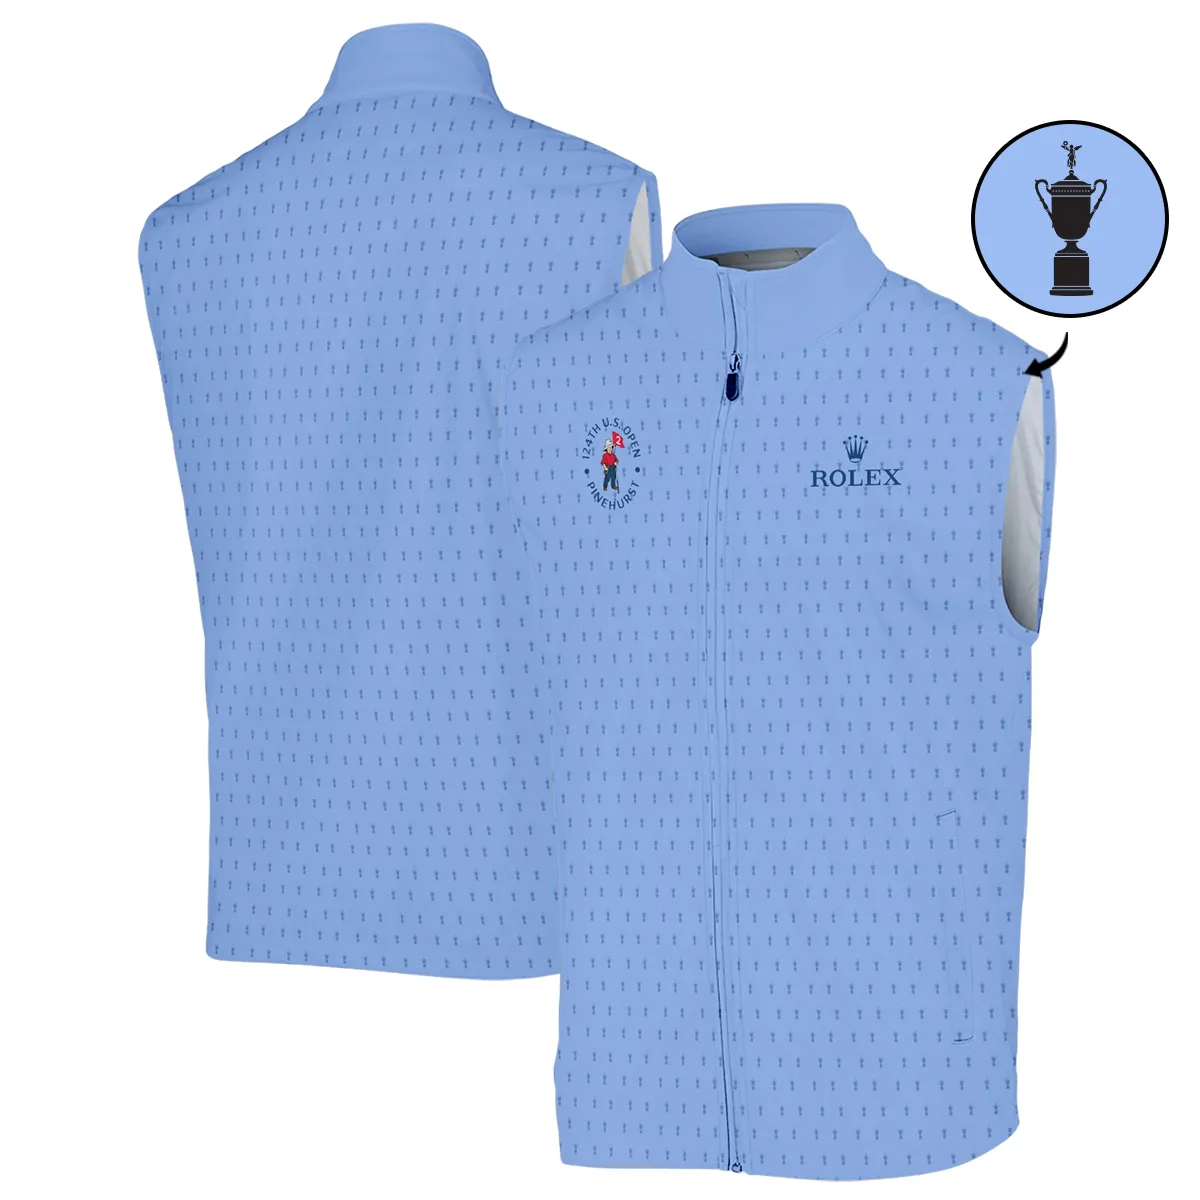 Golf Pattern Cup Blue 124th U.S. Open Pinehurst Pinehurst Rolex Zipper Hoodie Shirt Style Classic